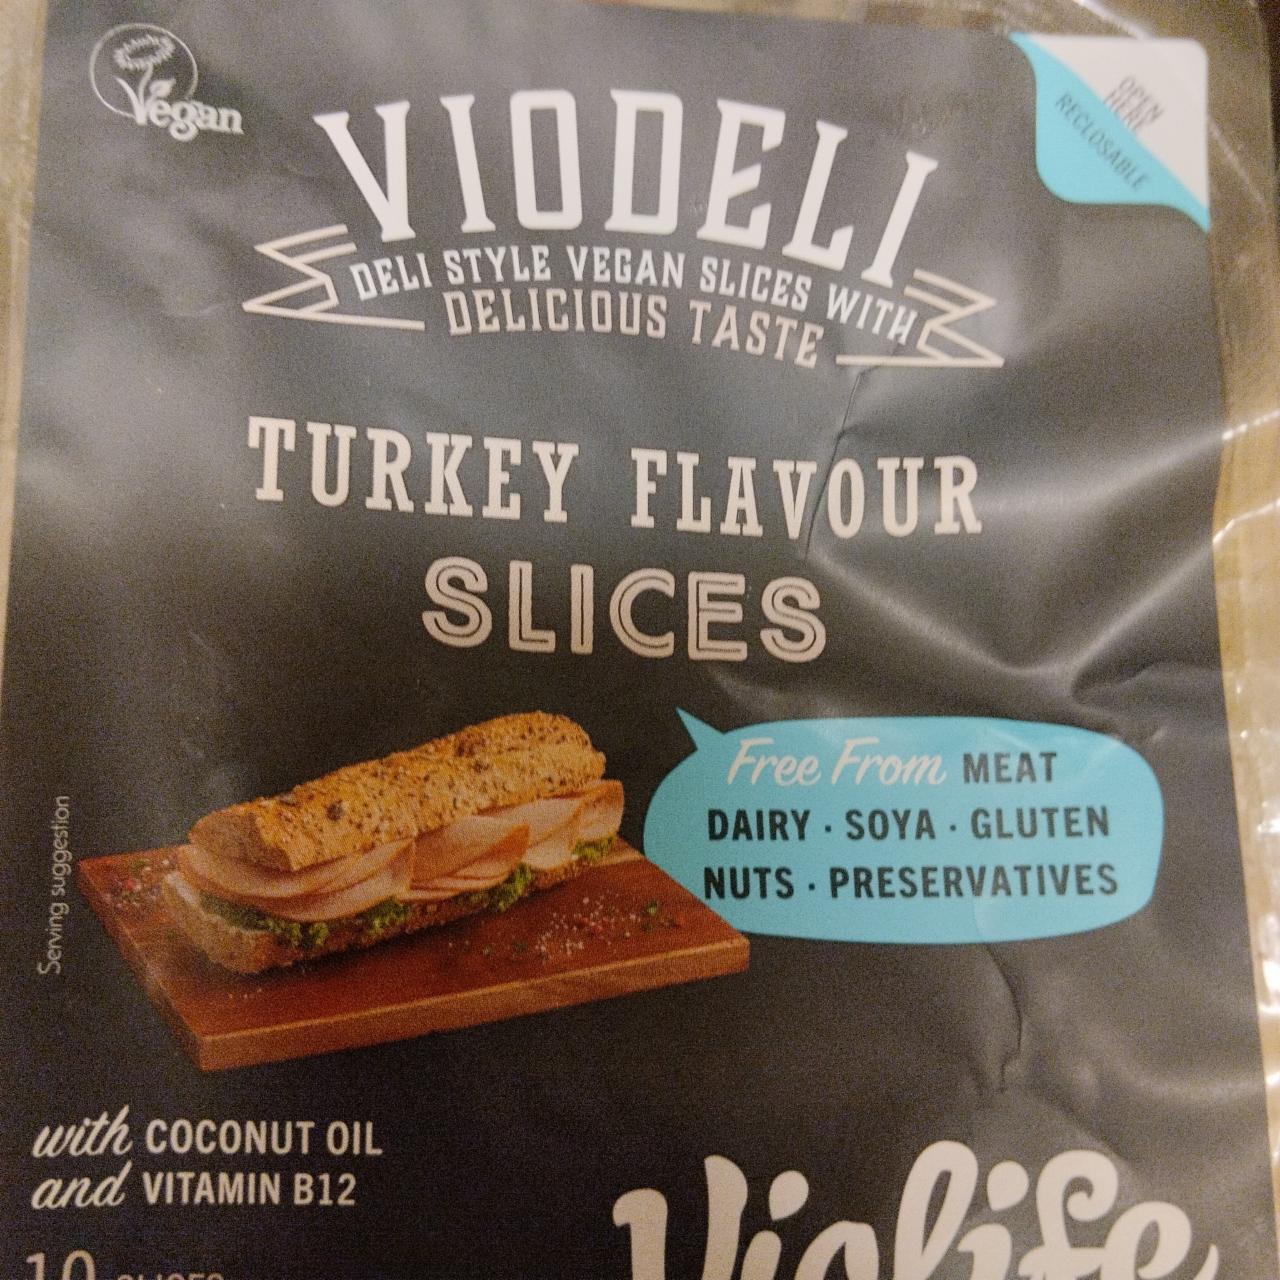 Fotografie - Viodeli Turkey Flavour Slices Violife